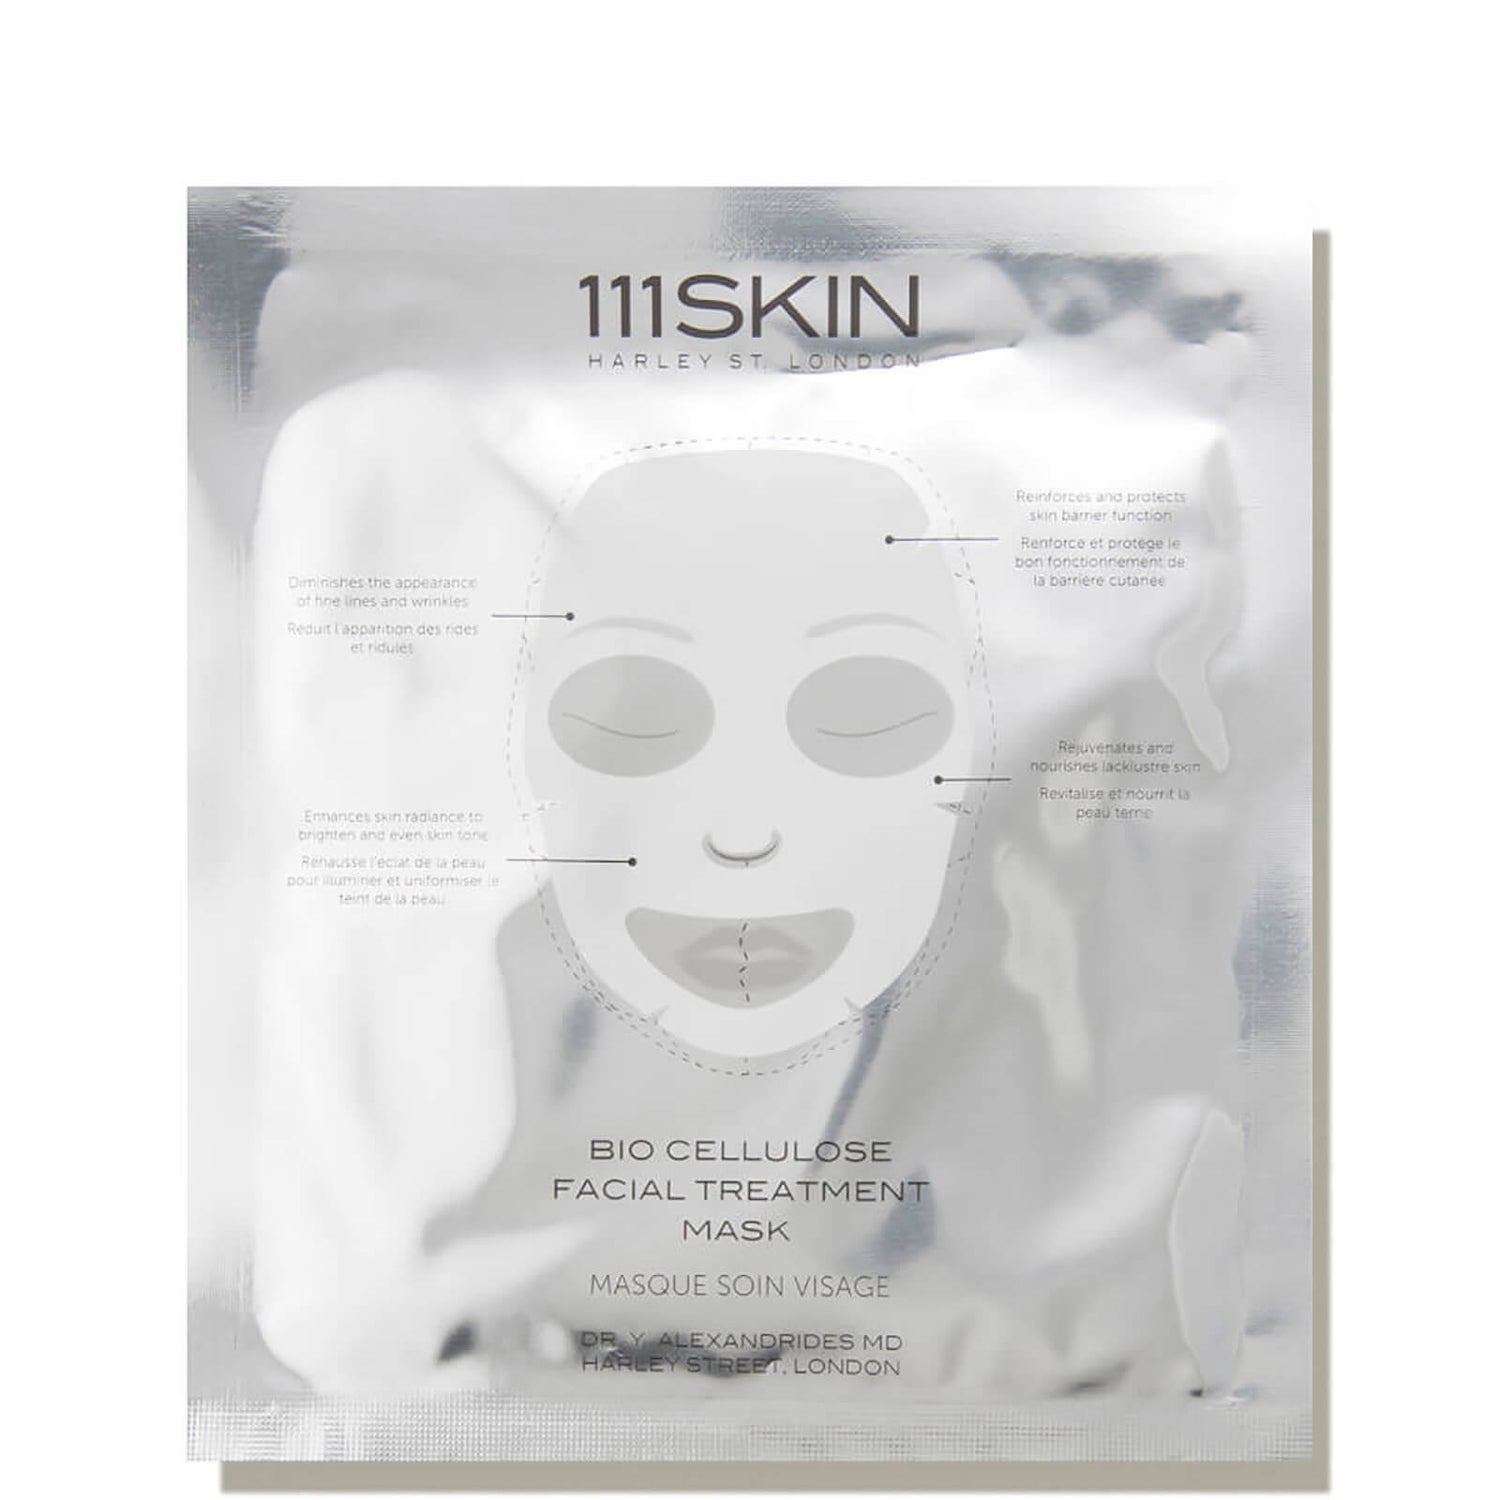 111SKIN Bio Cellulose Facial Treatment Mask (5 count)